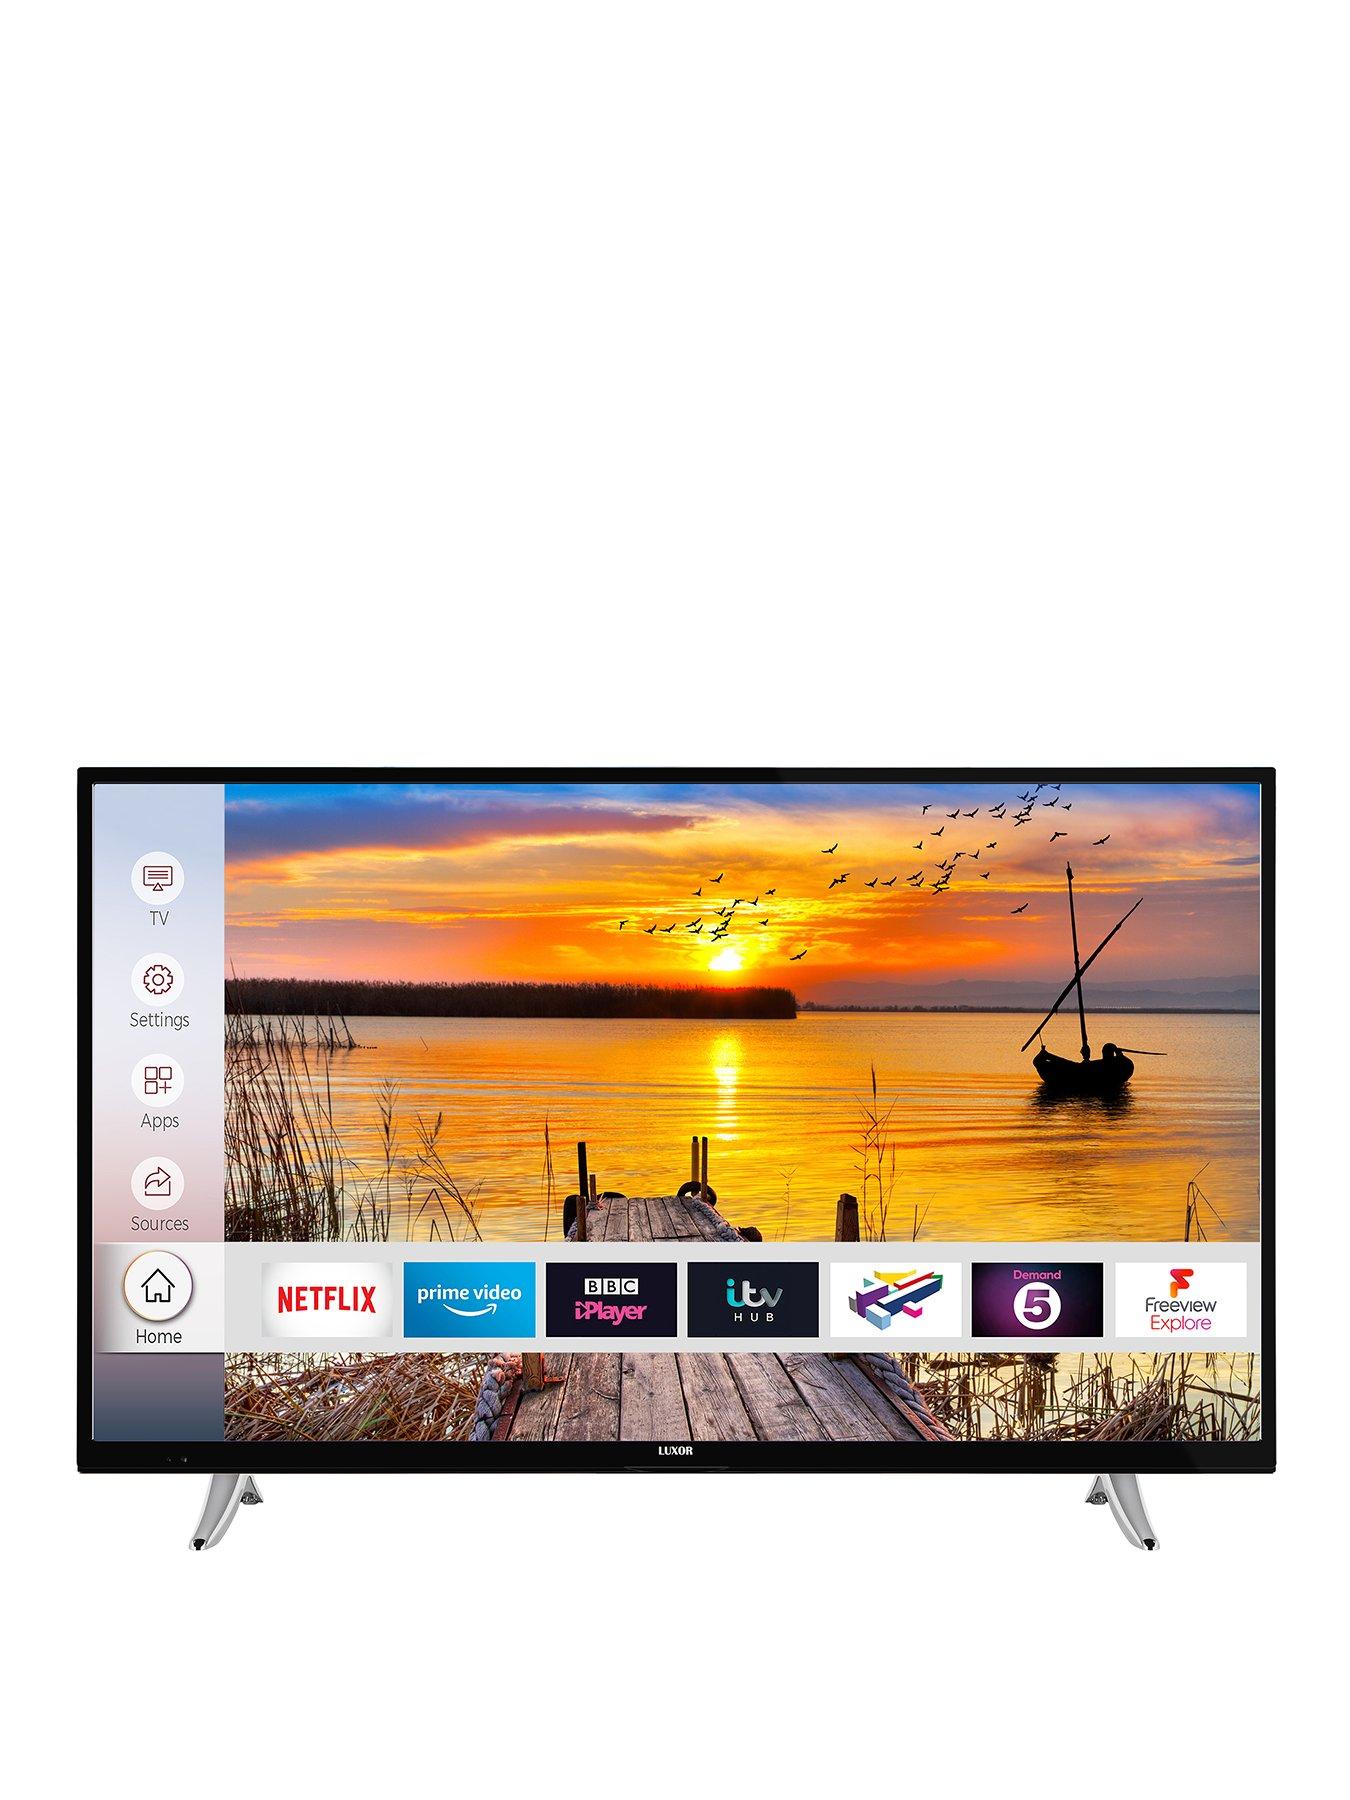 Ellendig Matron ze Luxor 50 inch 4K UHD, Freeview Play, Smart TV | littlewoods.com